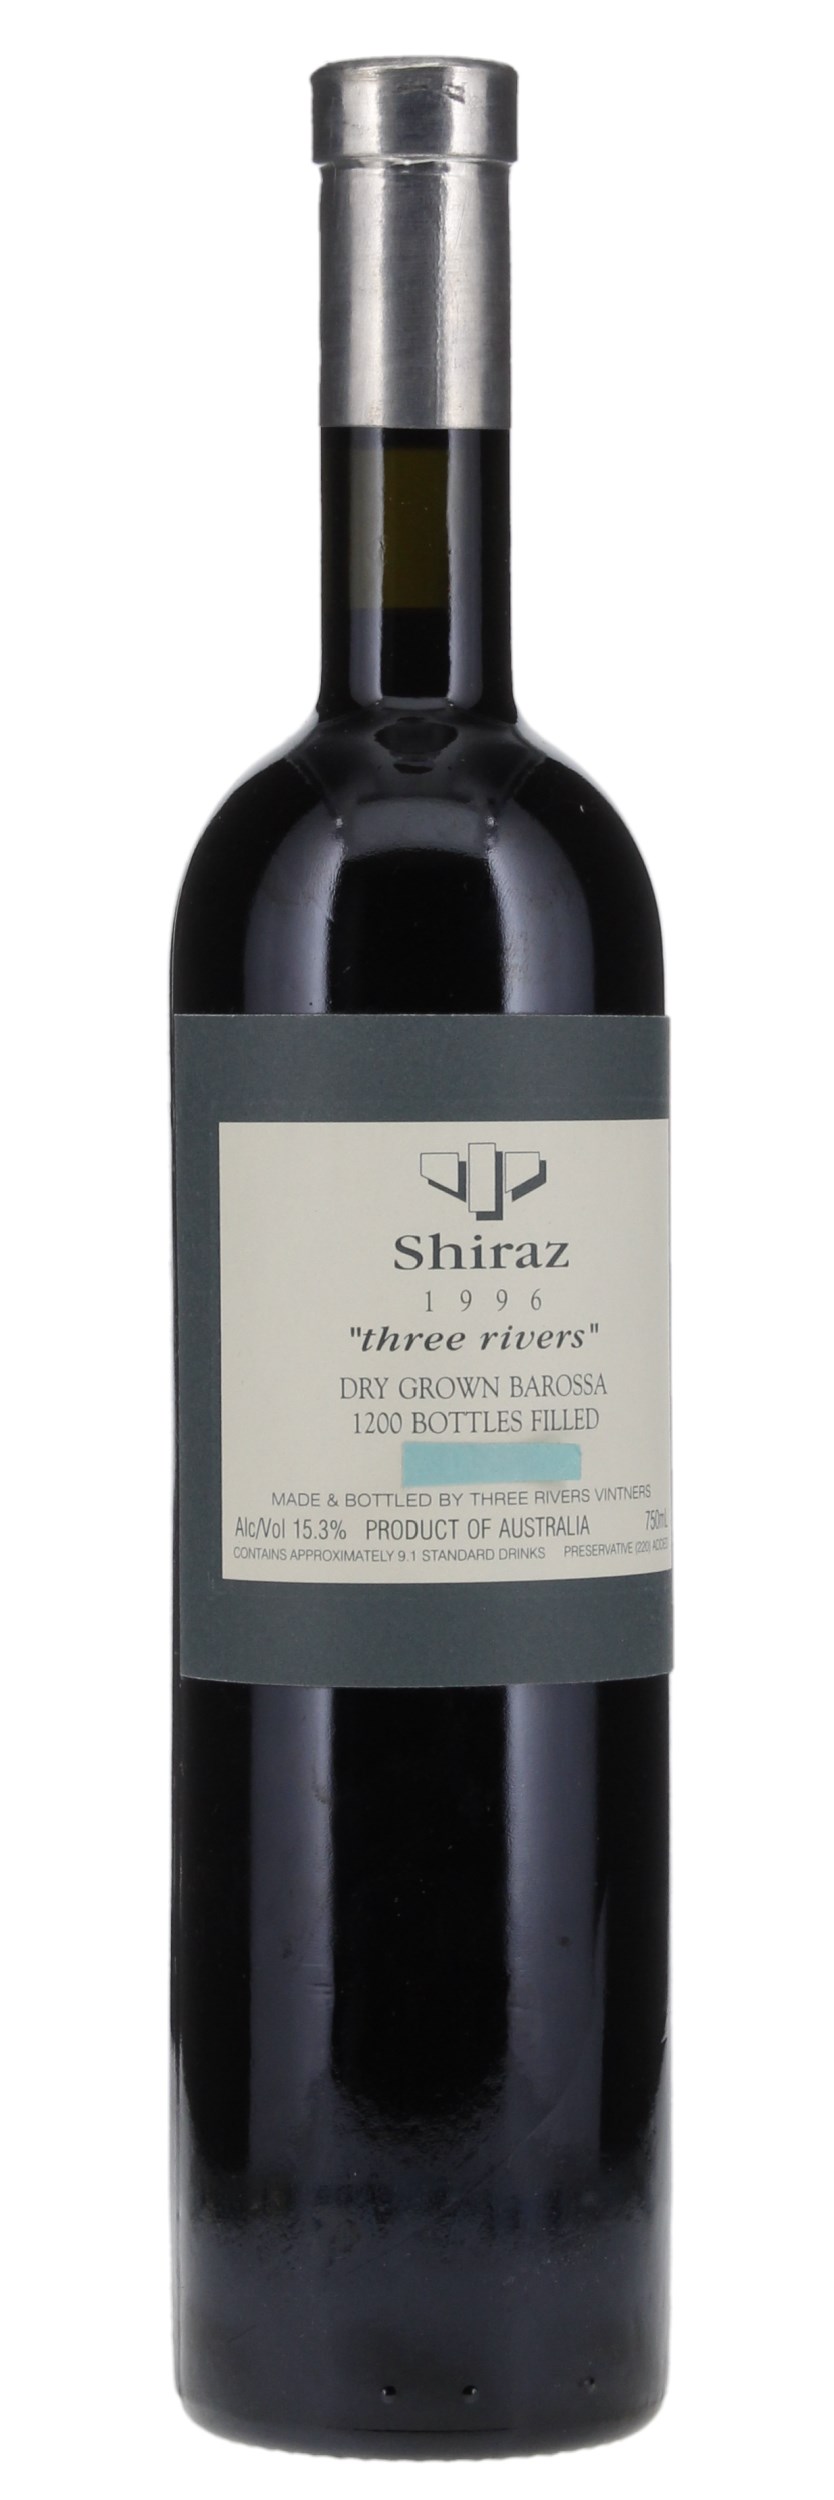 1996 Three Rivers Shiraz, 750ml